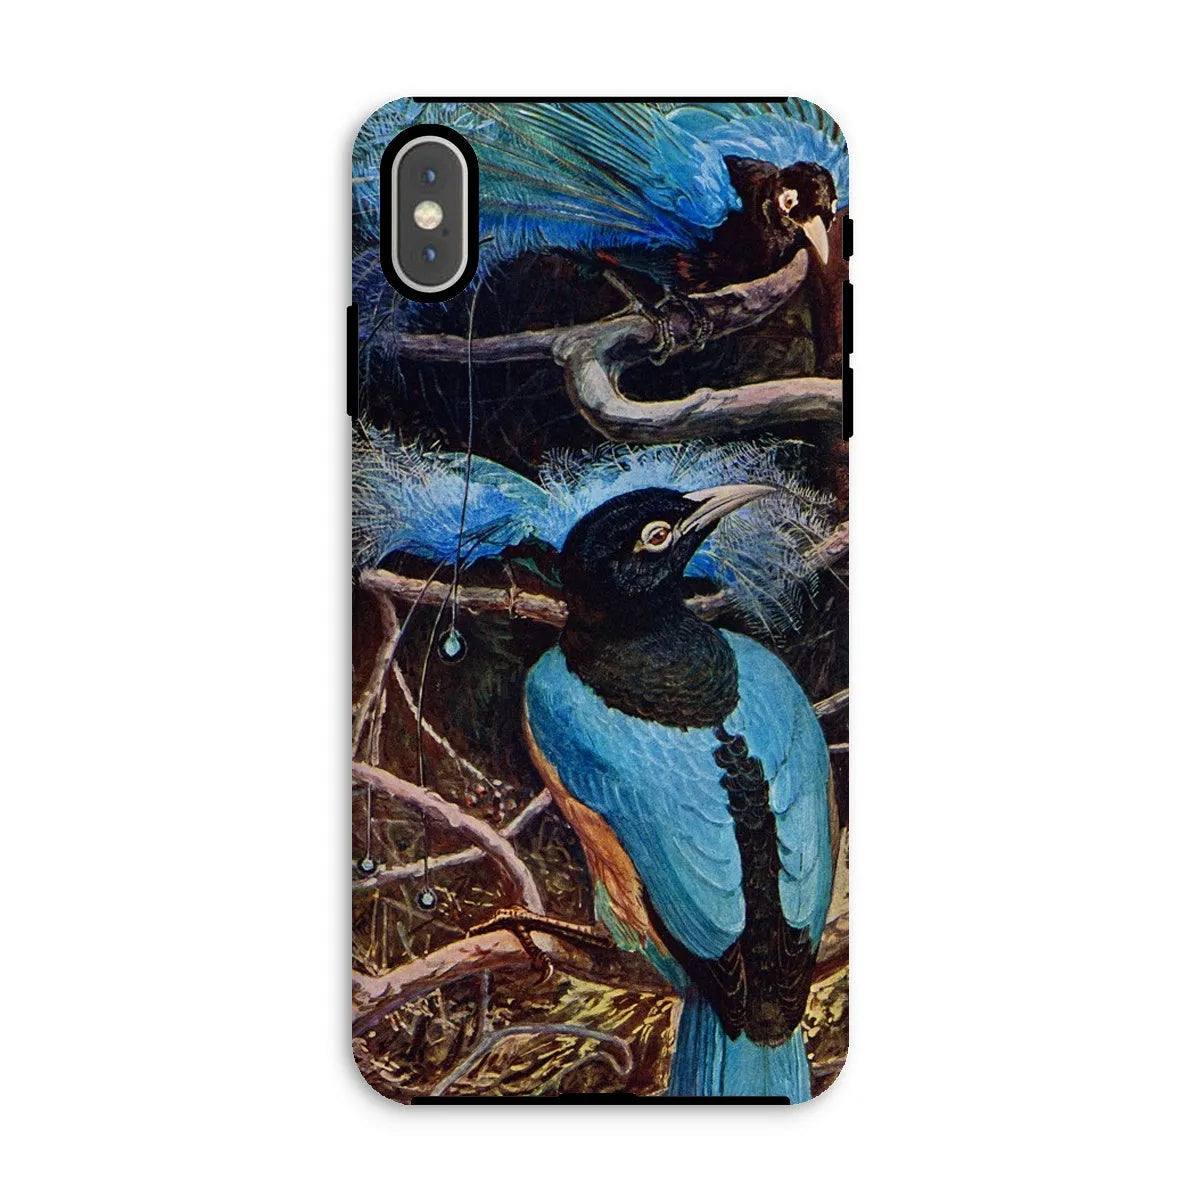 Blue Bird Of Paradise Aesthetic Phone Case - Henry Johnston - Iphone Xs Max / Matte - Mobile Phone Cases - Aesthetic Art